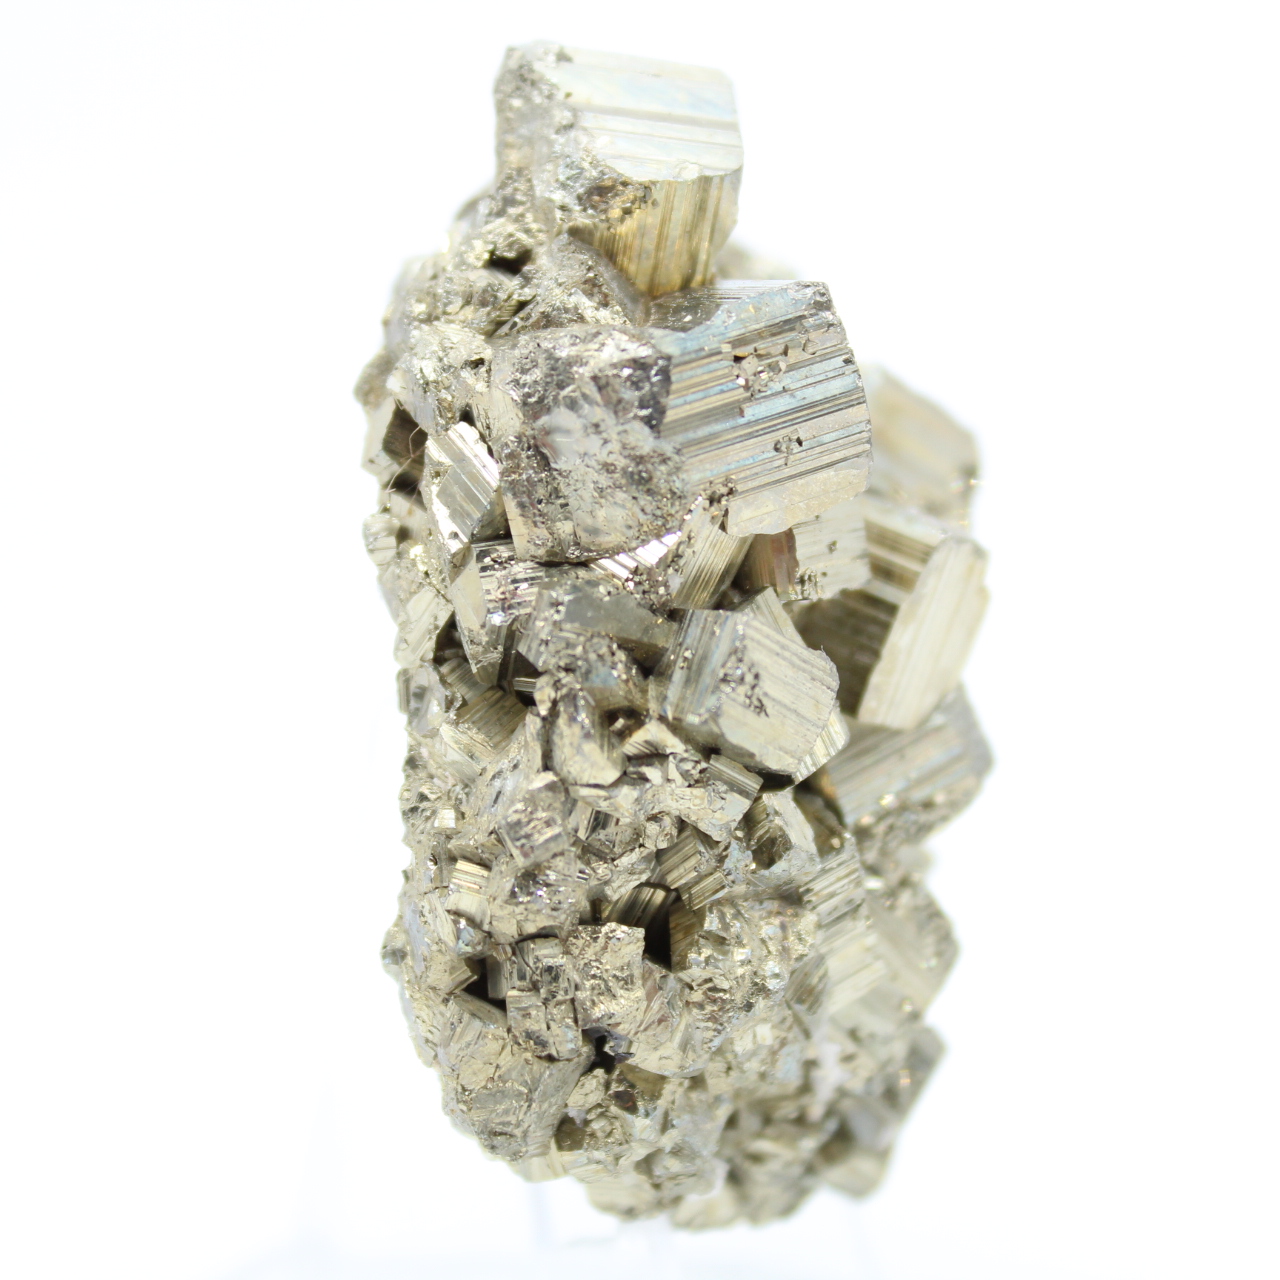 Pyrite raw crystals